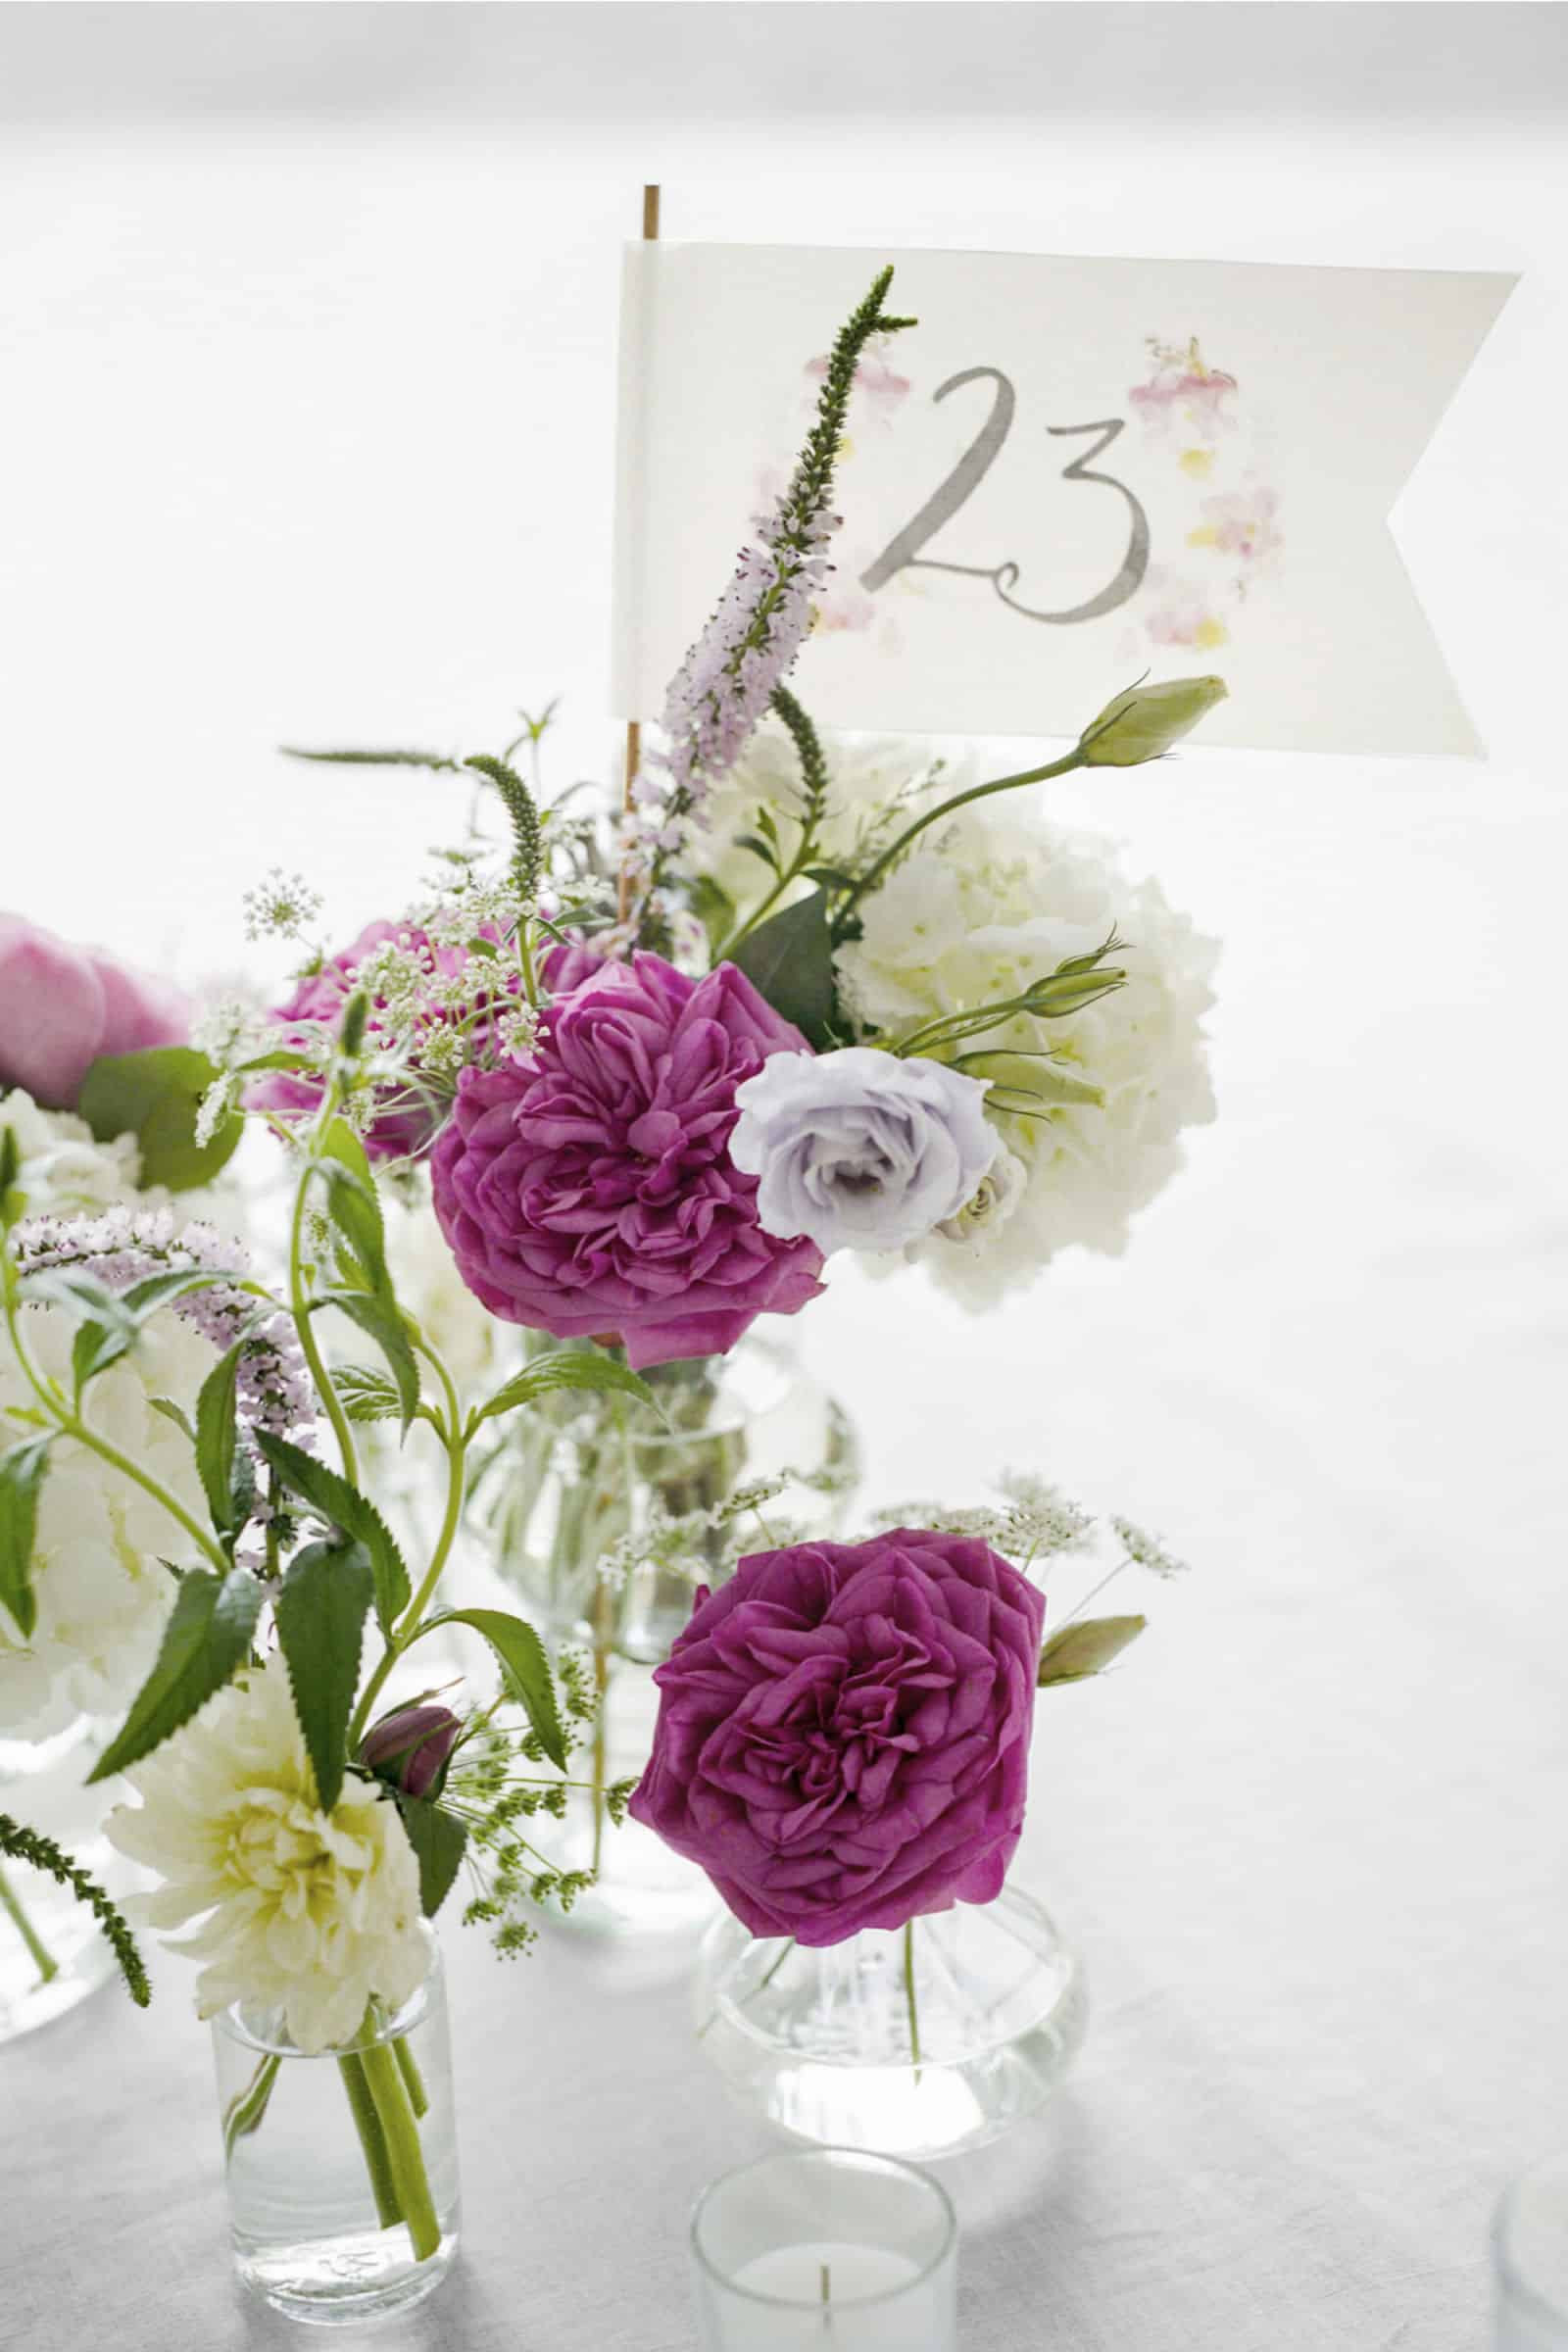 DIY Wedding Floral Centerpieces
 15 Wedding Centerpieces That You Can DIY